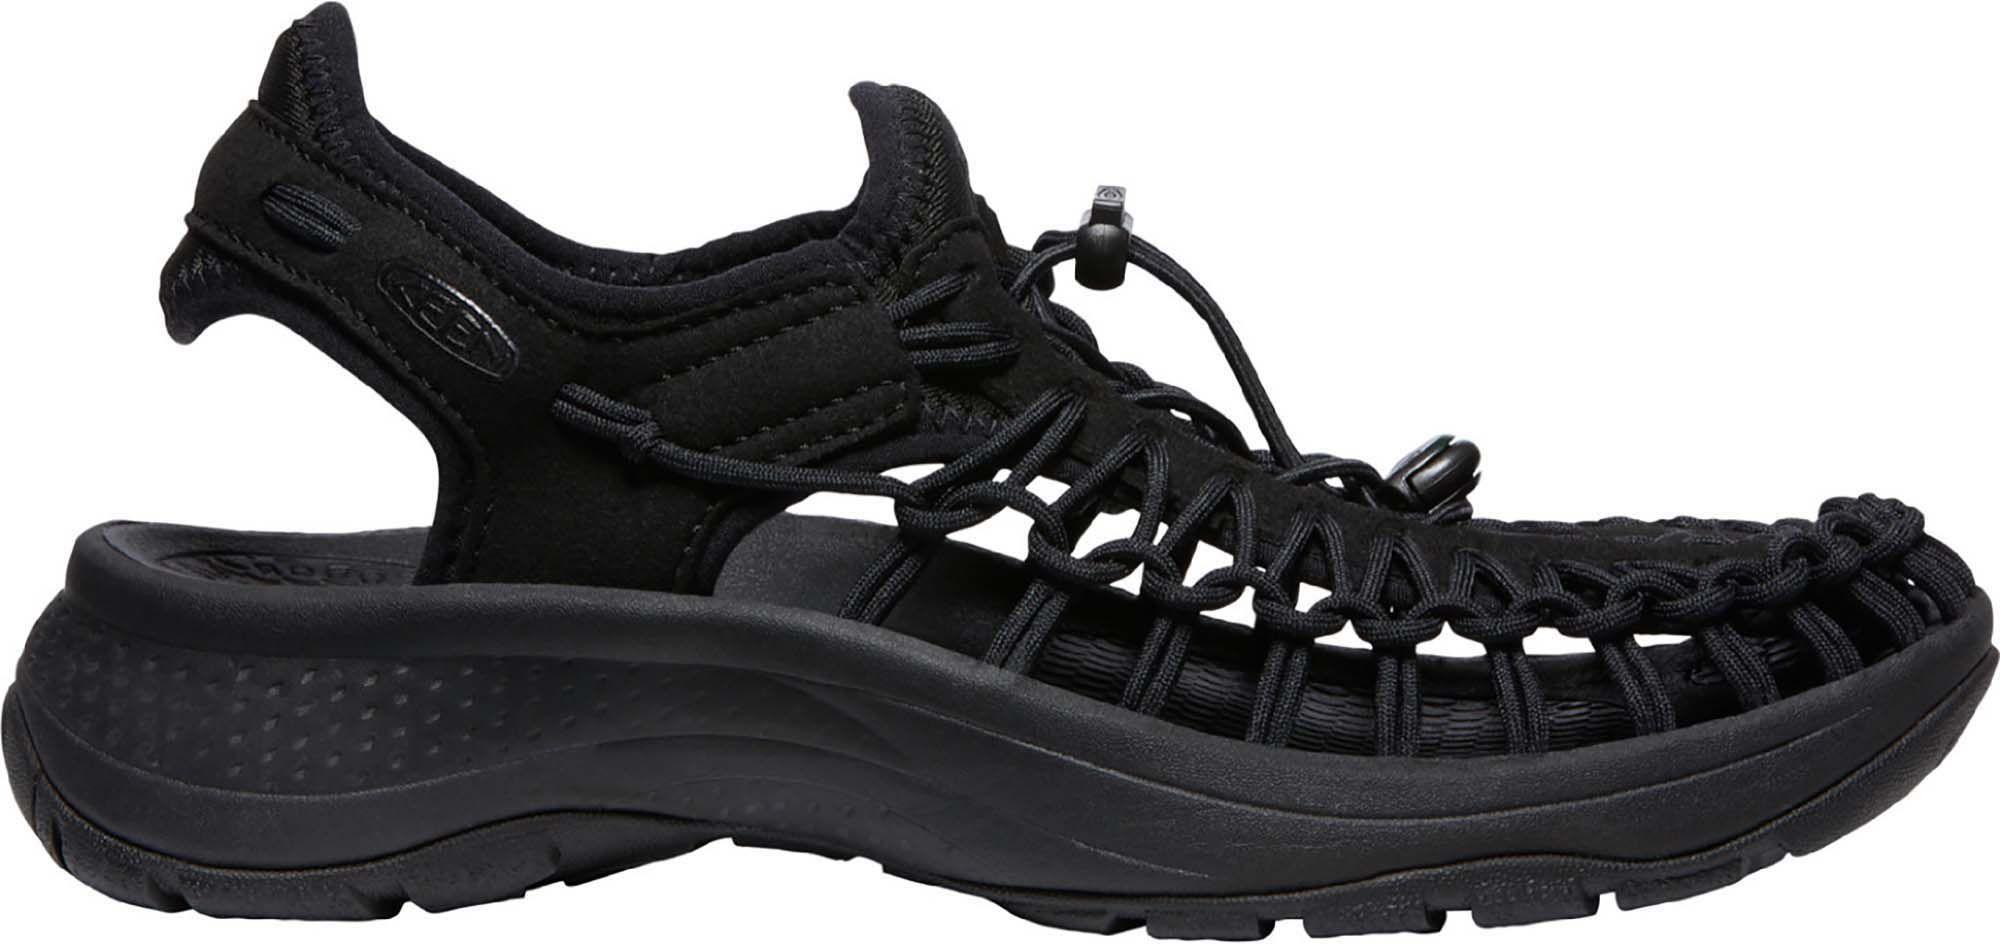 KEEN Uneek Astoria (Black/Black) Women's Shoes Product Image